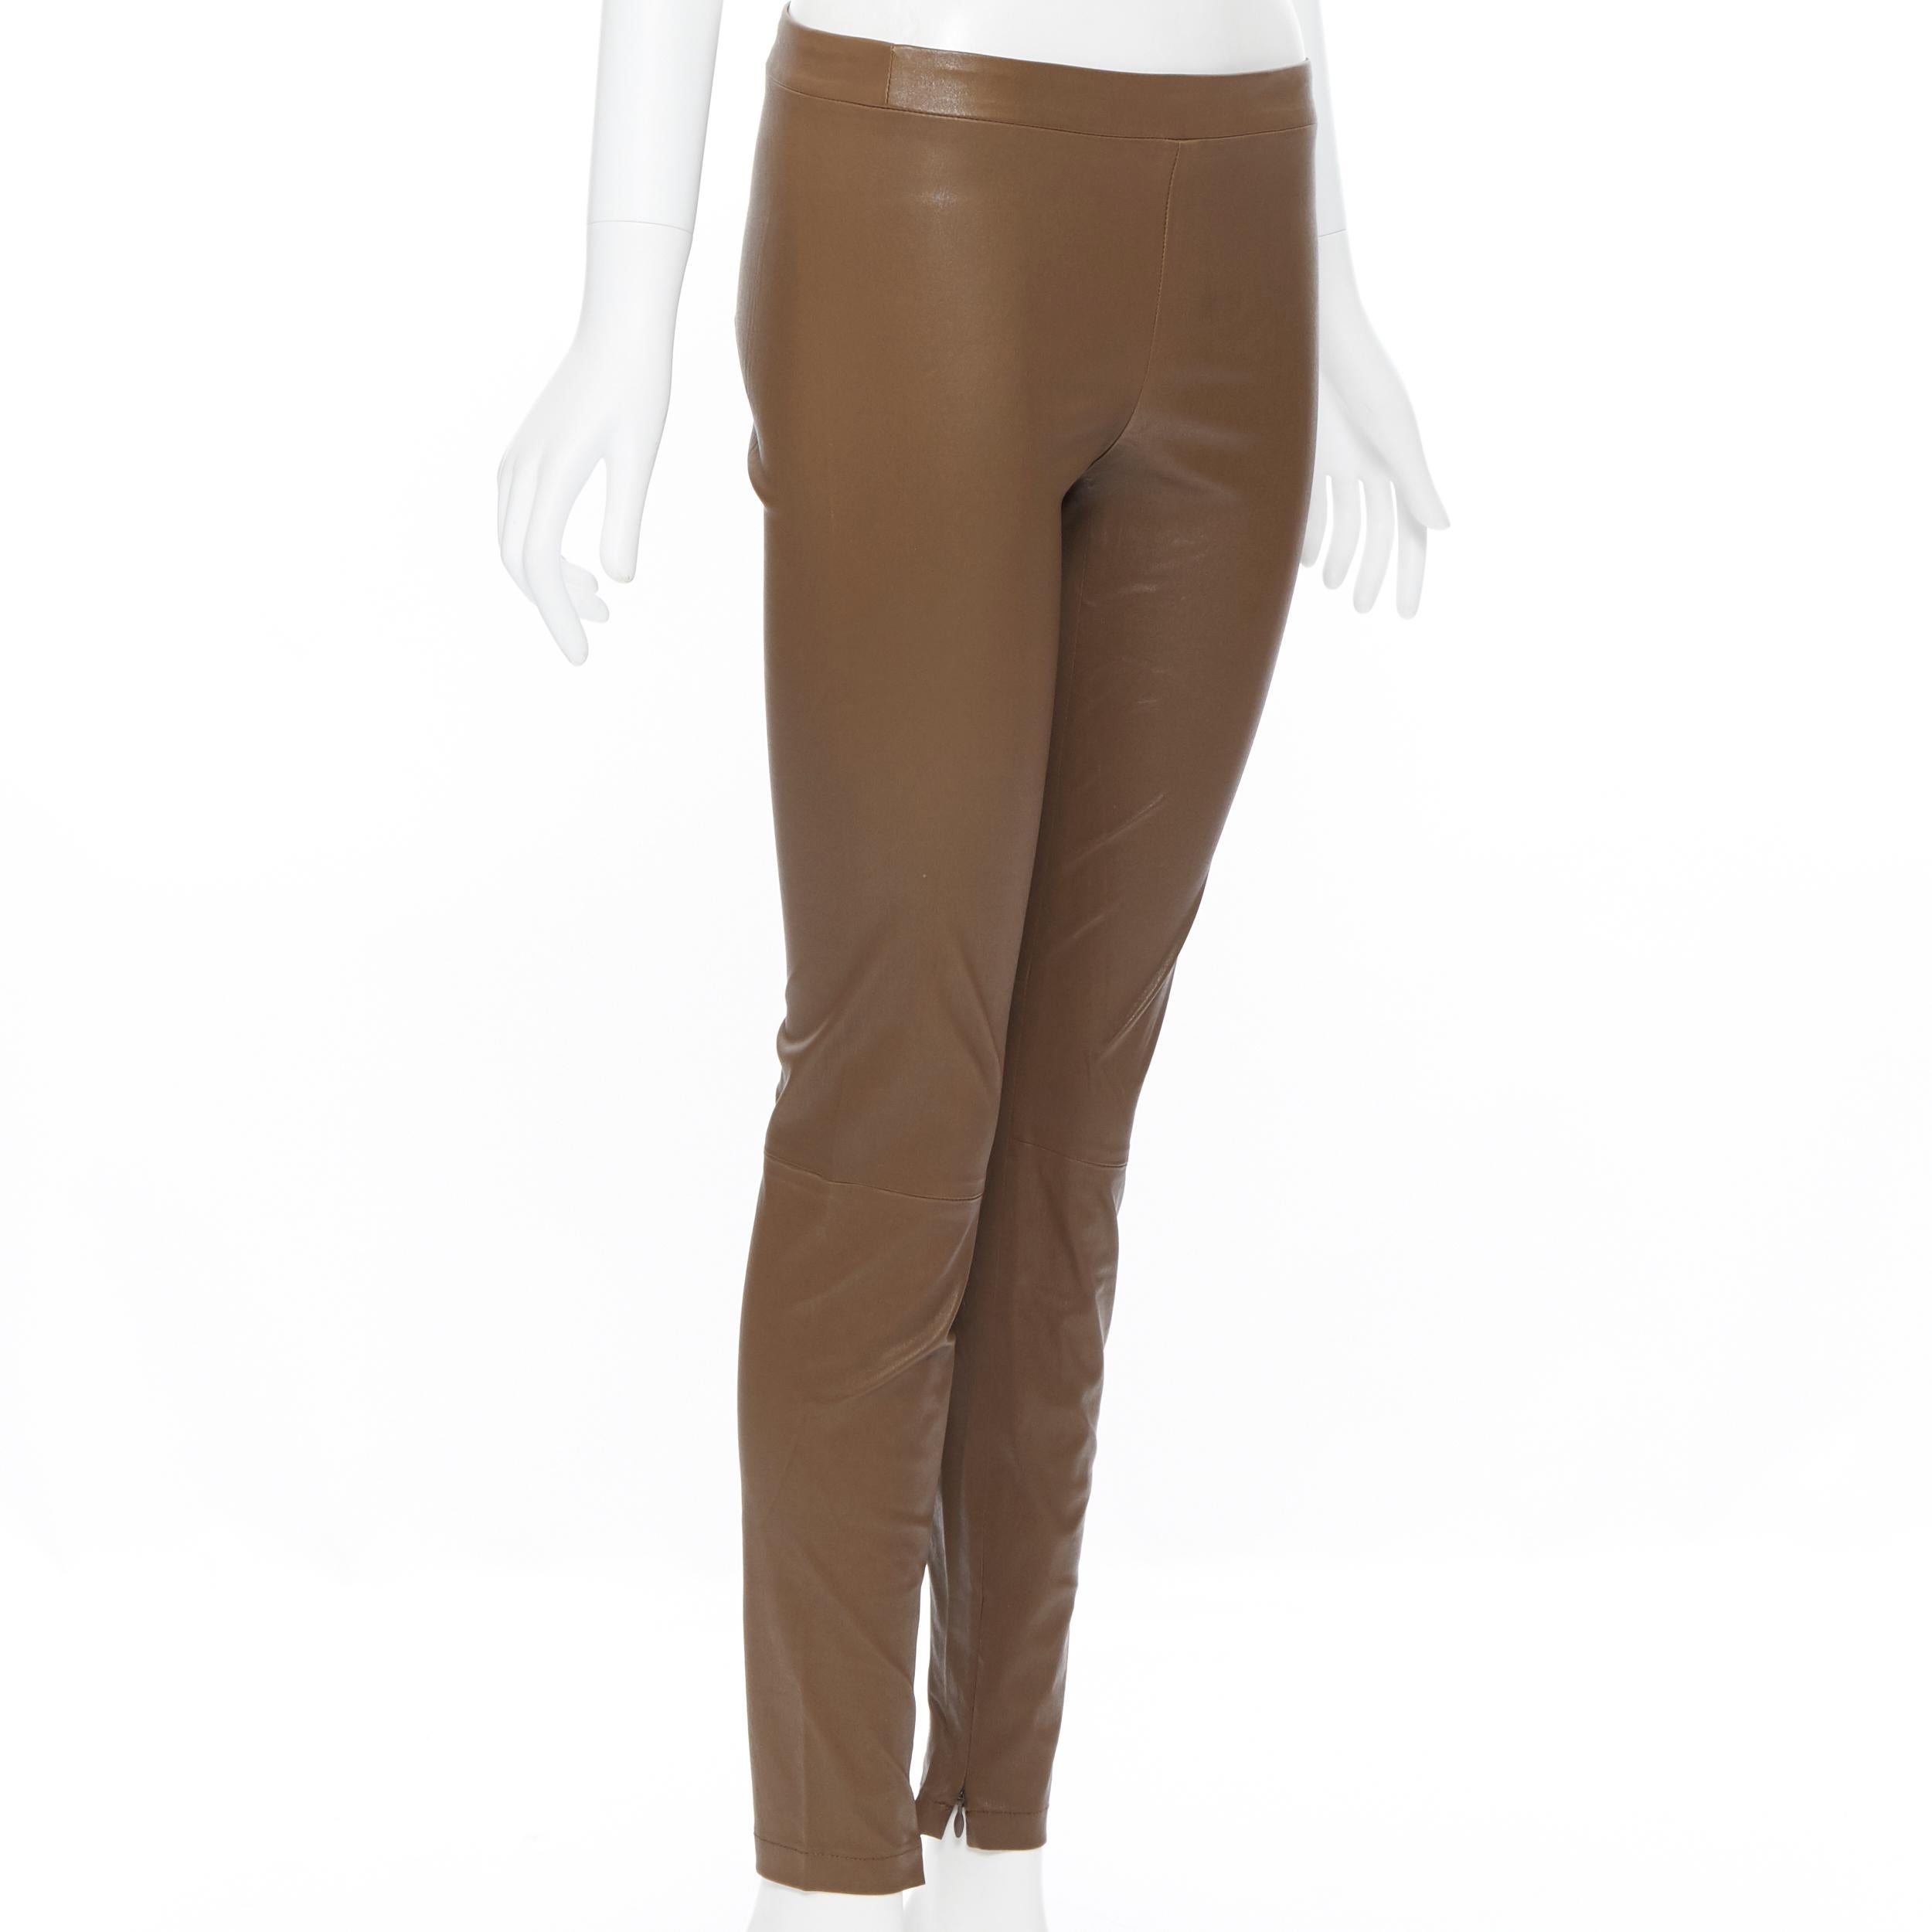 Brown VINCE 100% leather tan brown minimal stretchy skinny leg pants XS